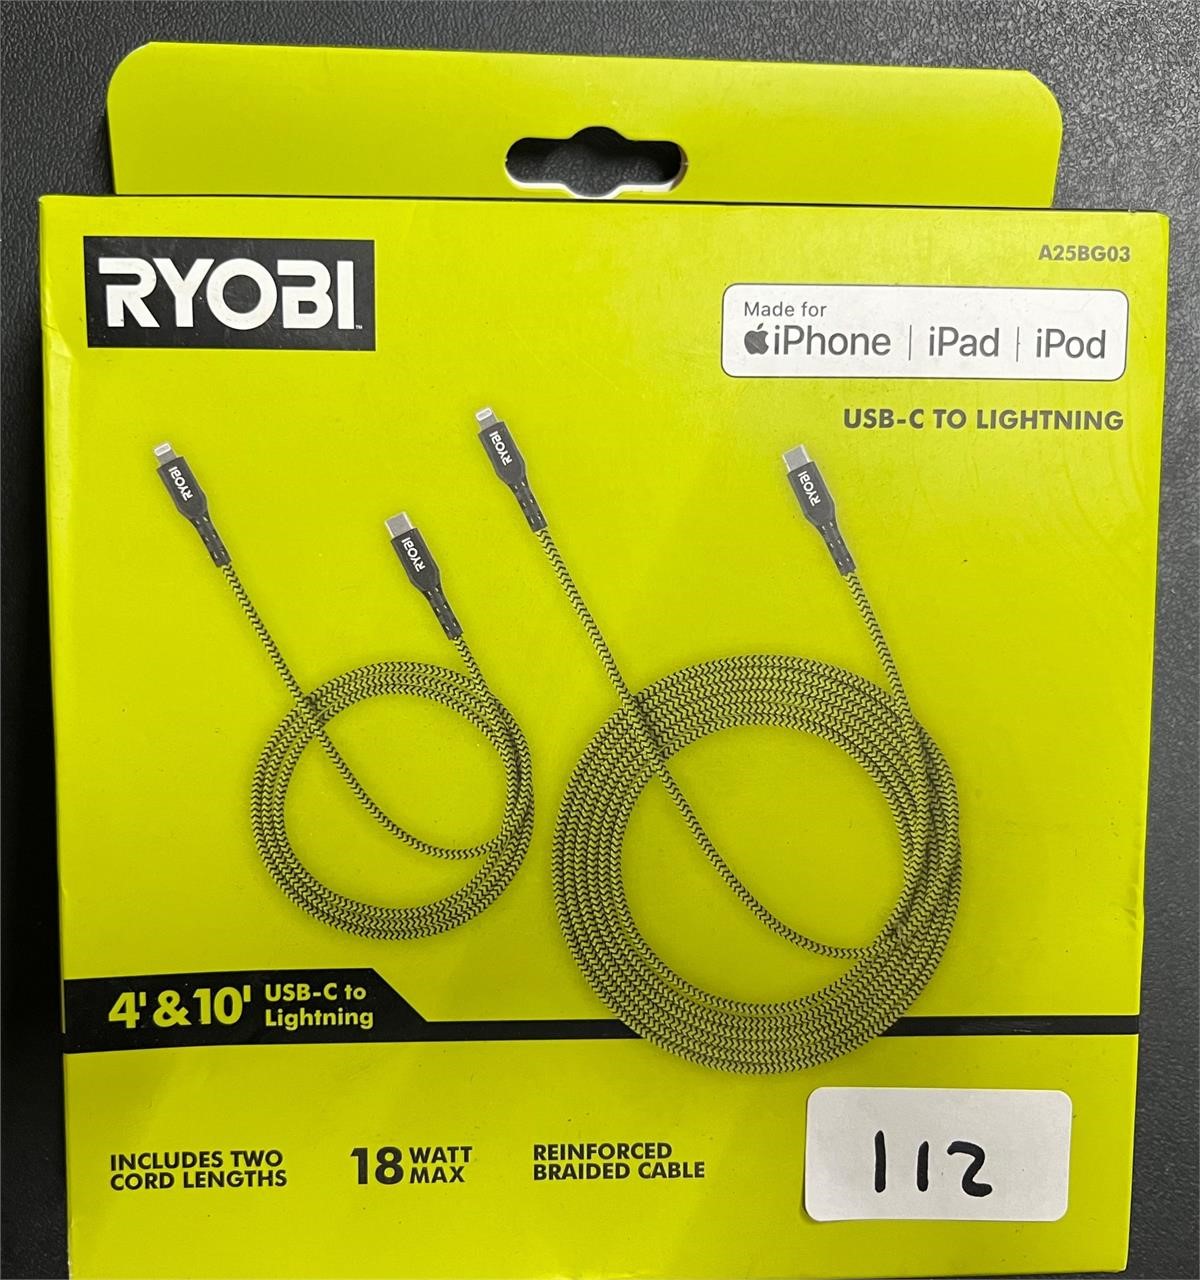 Ryobi USB-C to Lighting 4' & 10' Charging Cords